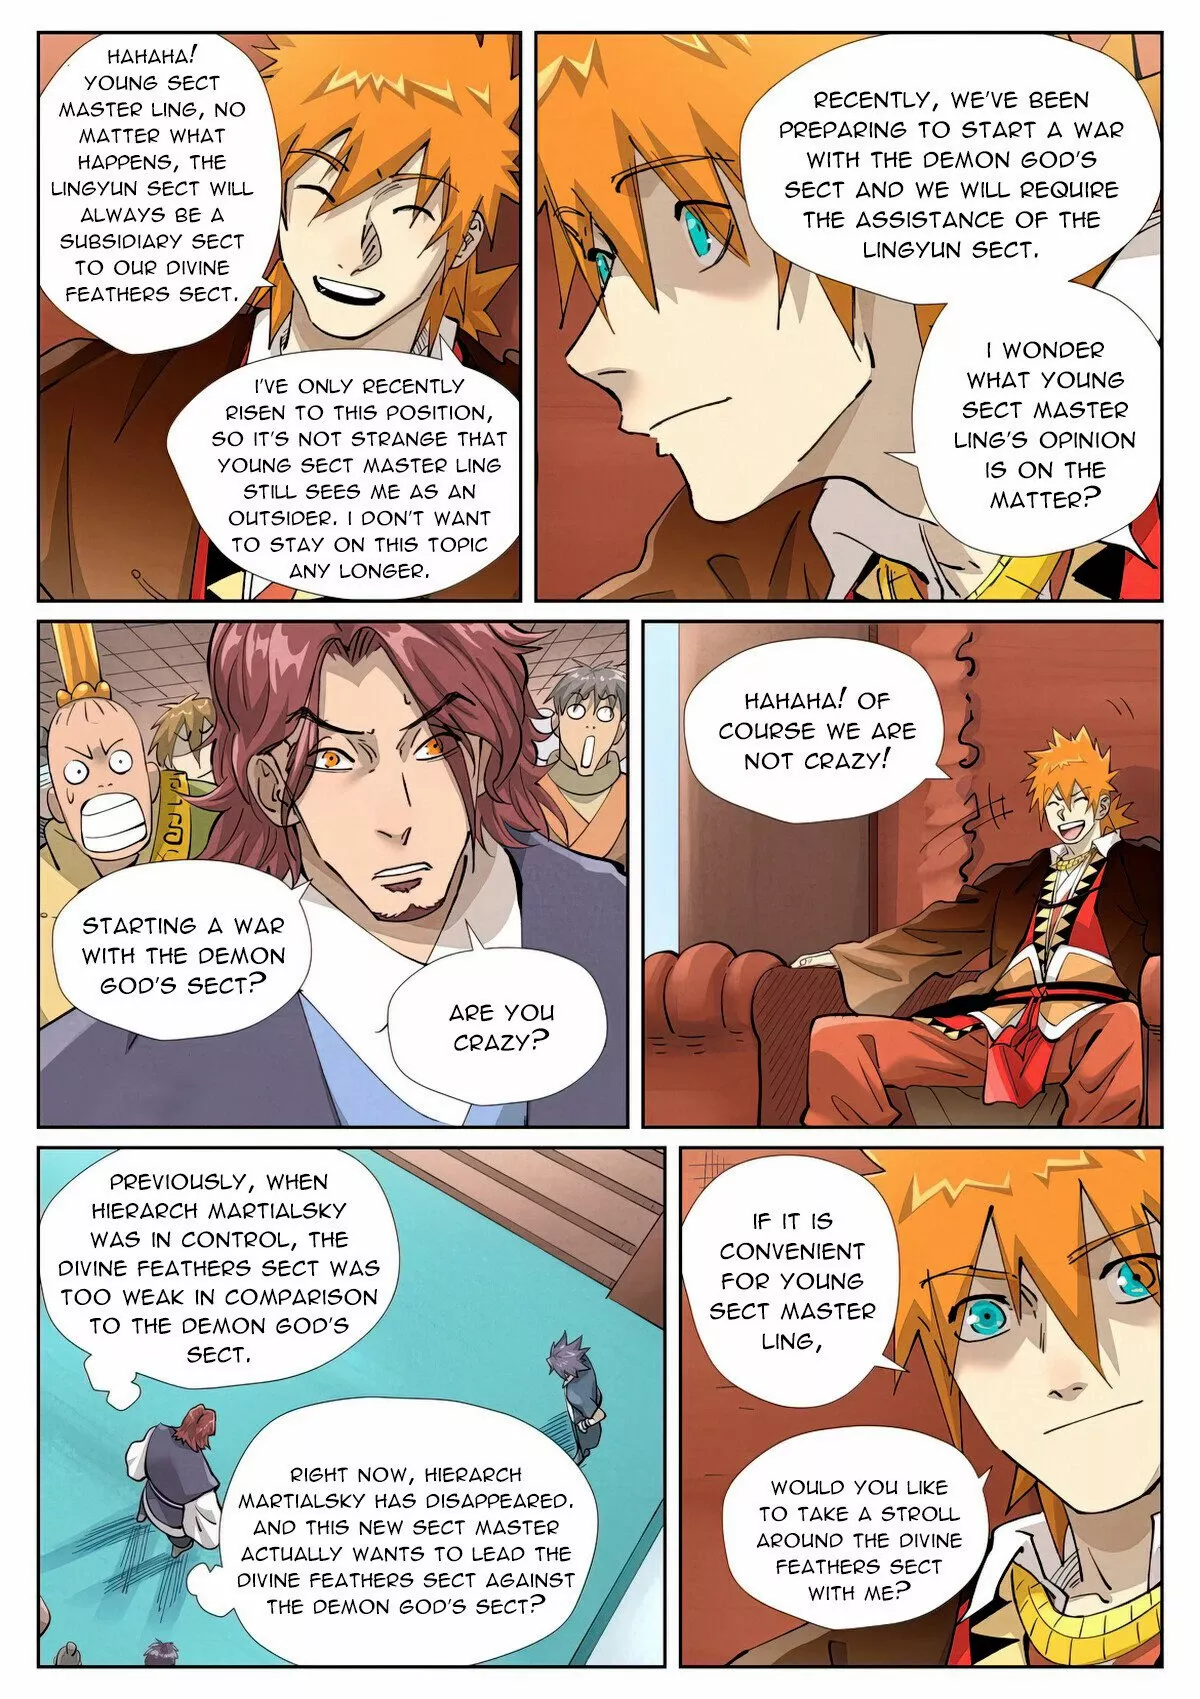 Tales Of Demons And Gods Chapter 430.6 page 3 - Mangakakalot